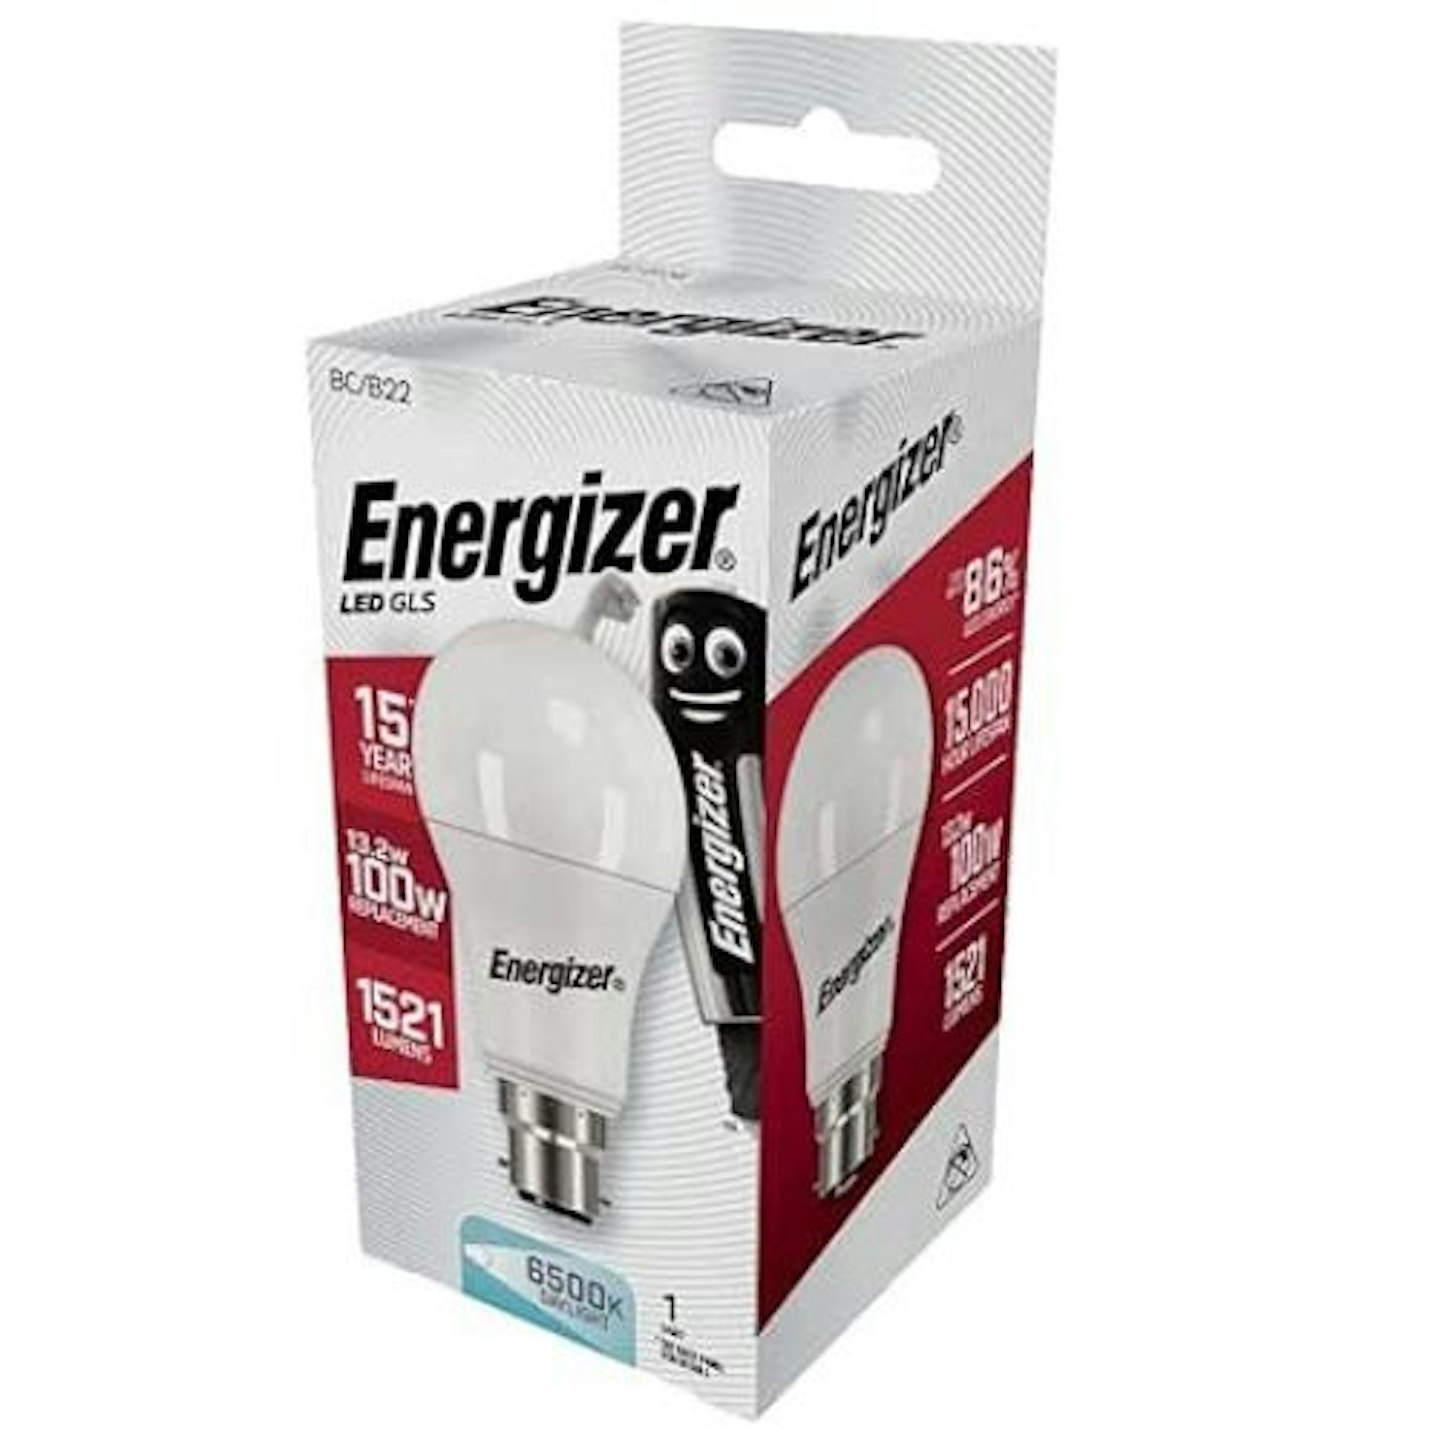 Energizer Energy Saving Light Bulbs